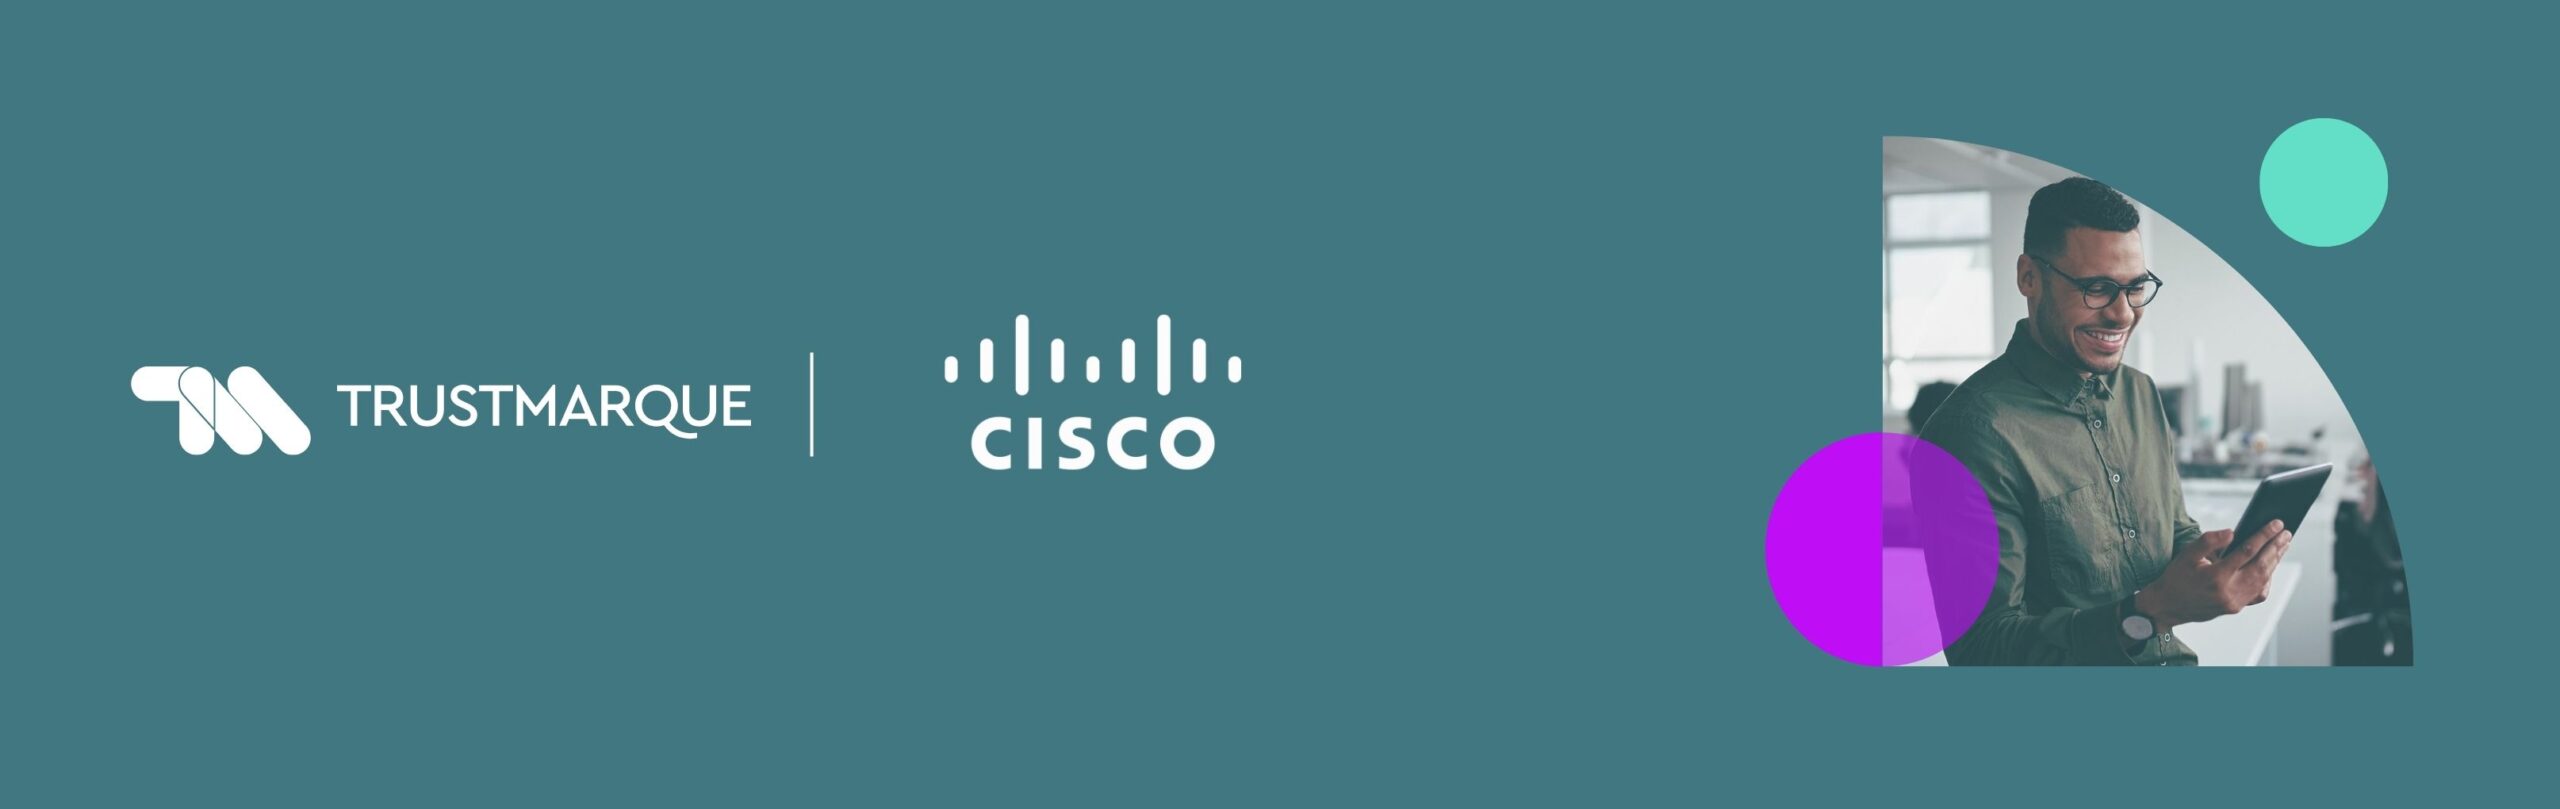 Trustmarque Cisco Hybrid Workplace